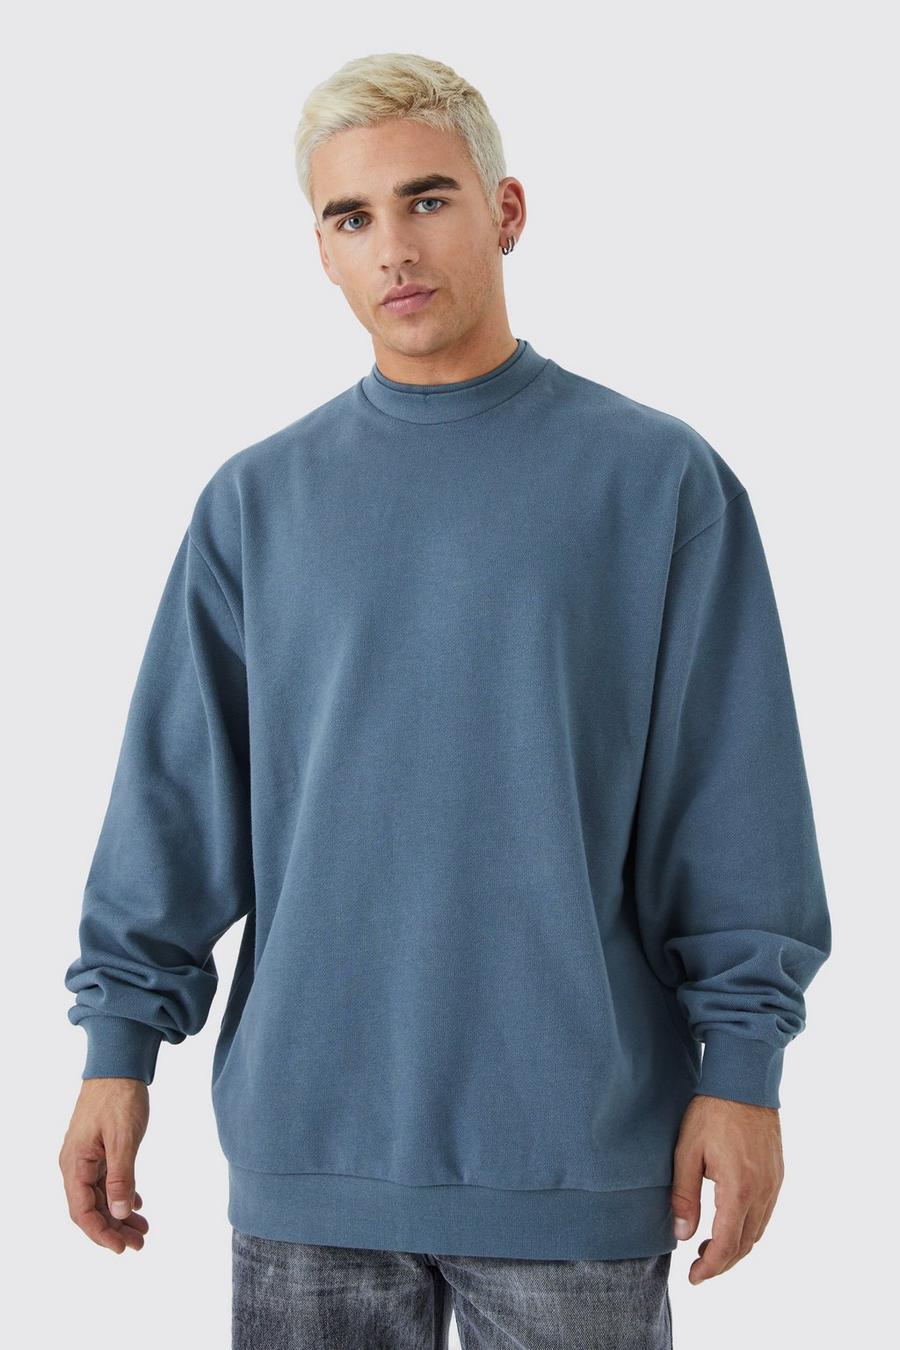 Slate blue Oversized Heavy Extend Double Neck Shirtshirt